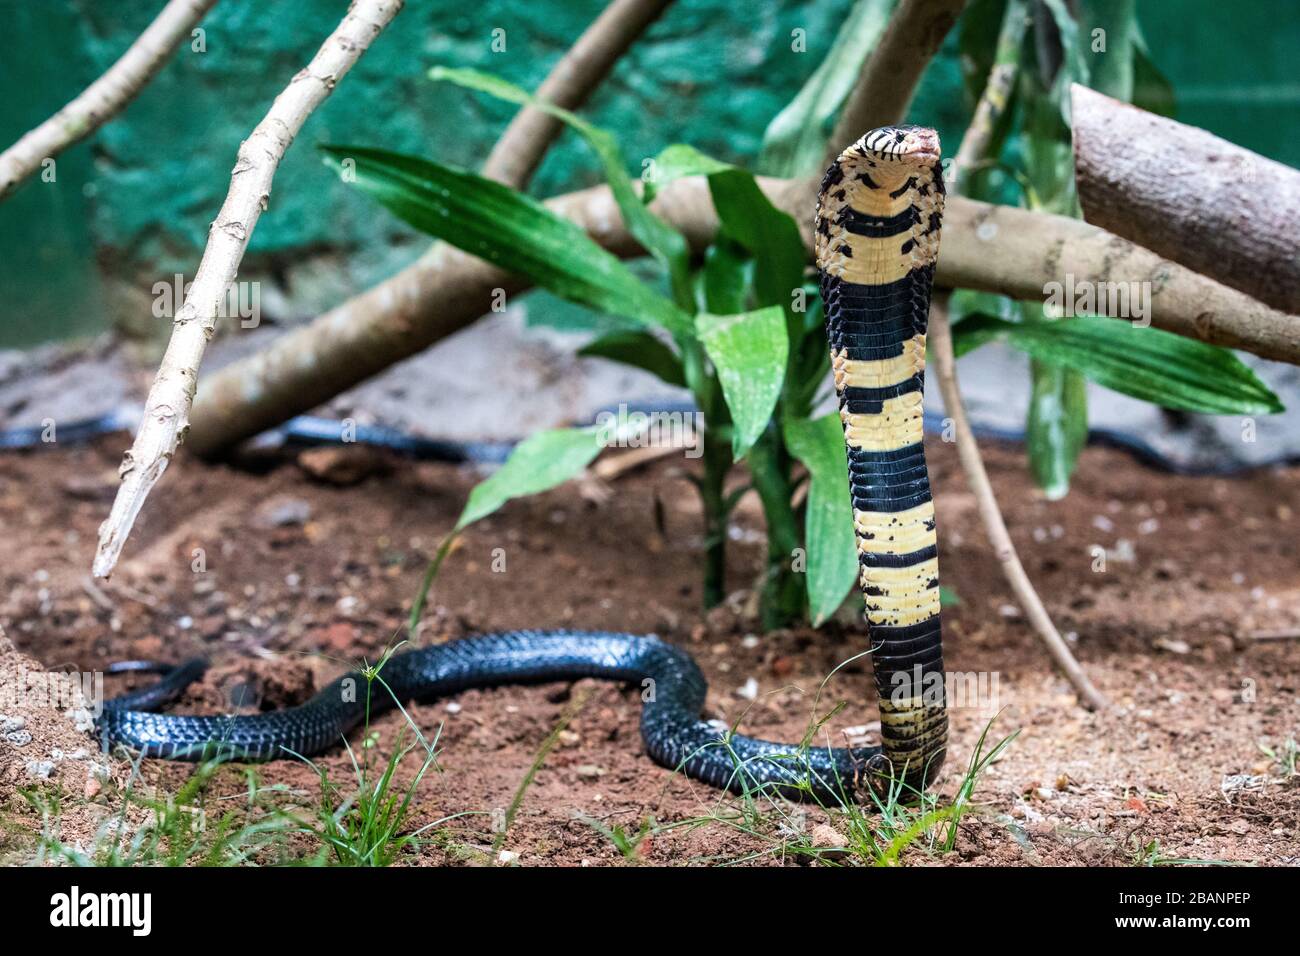 Cobra forestière (Naja melanoleuca) au village des Reptiles de l'Ouganda, Entebbe, Ouganda Banque D'Images